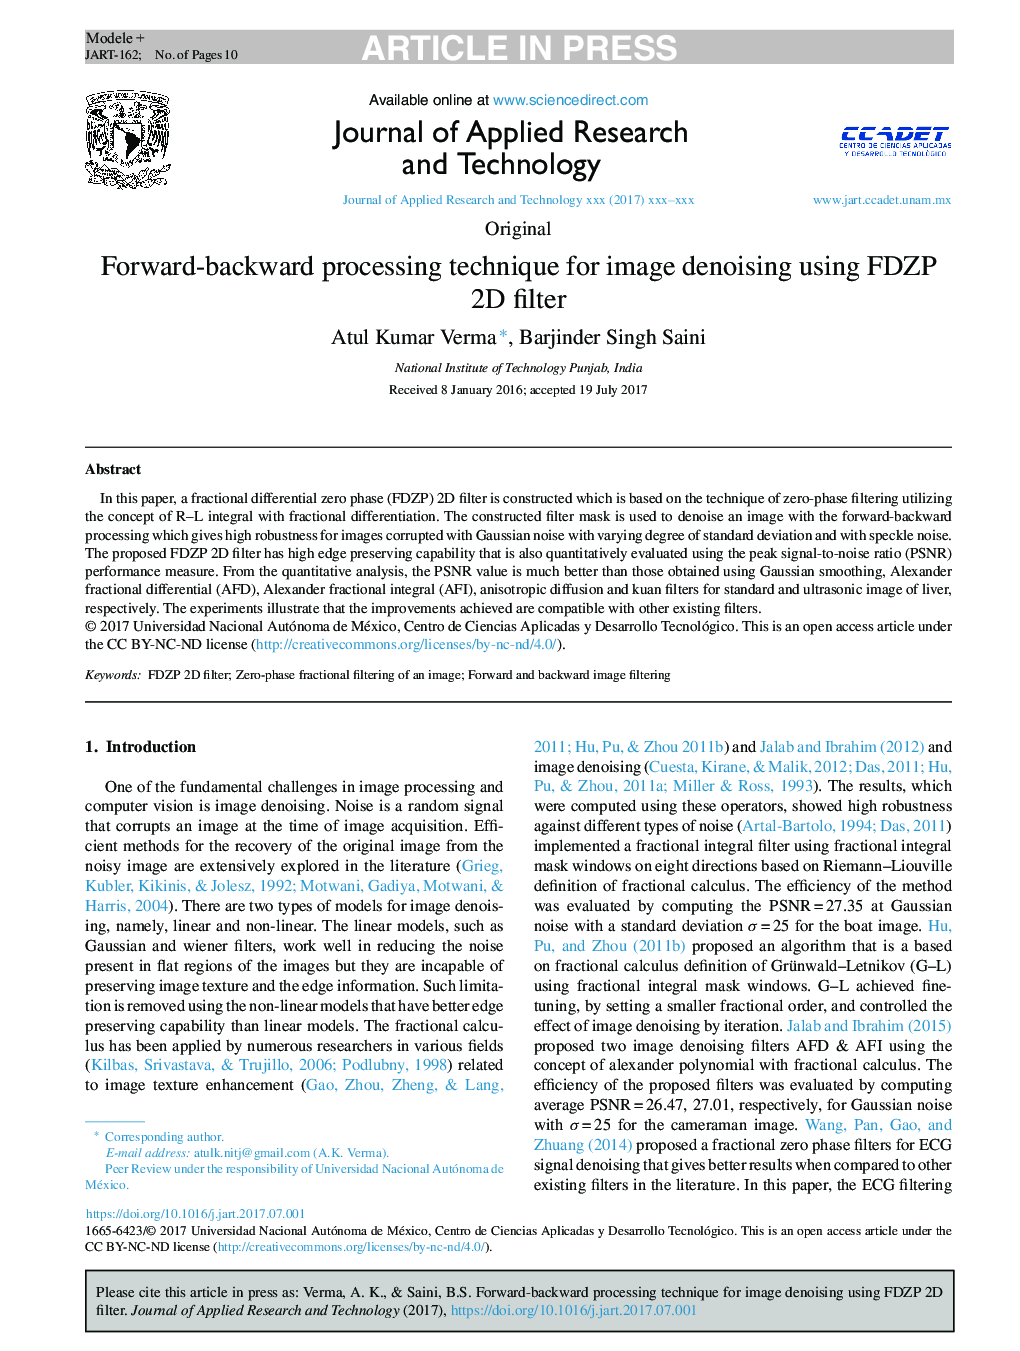 Forward-backward processing technique for image denoising using FDZP 2D filter